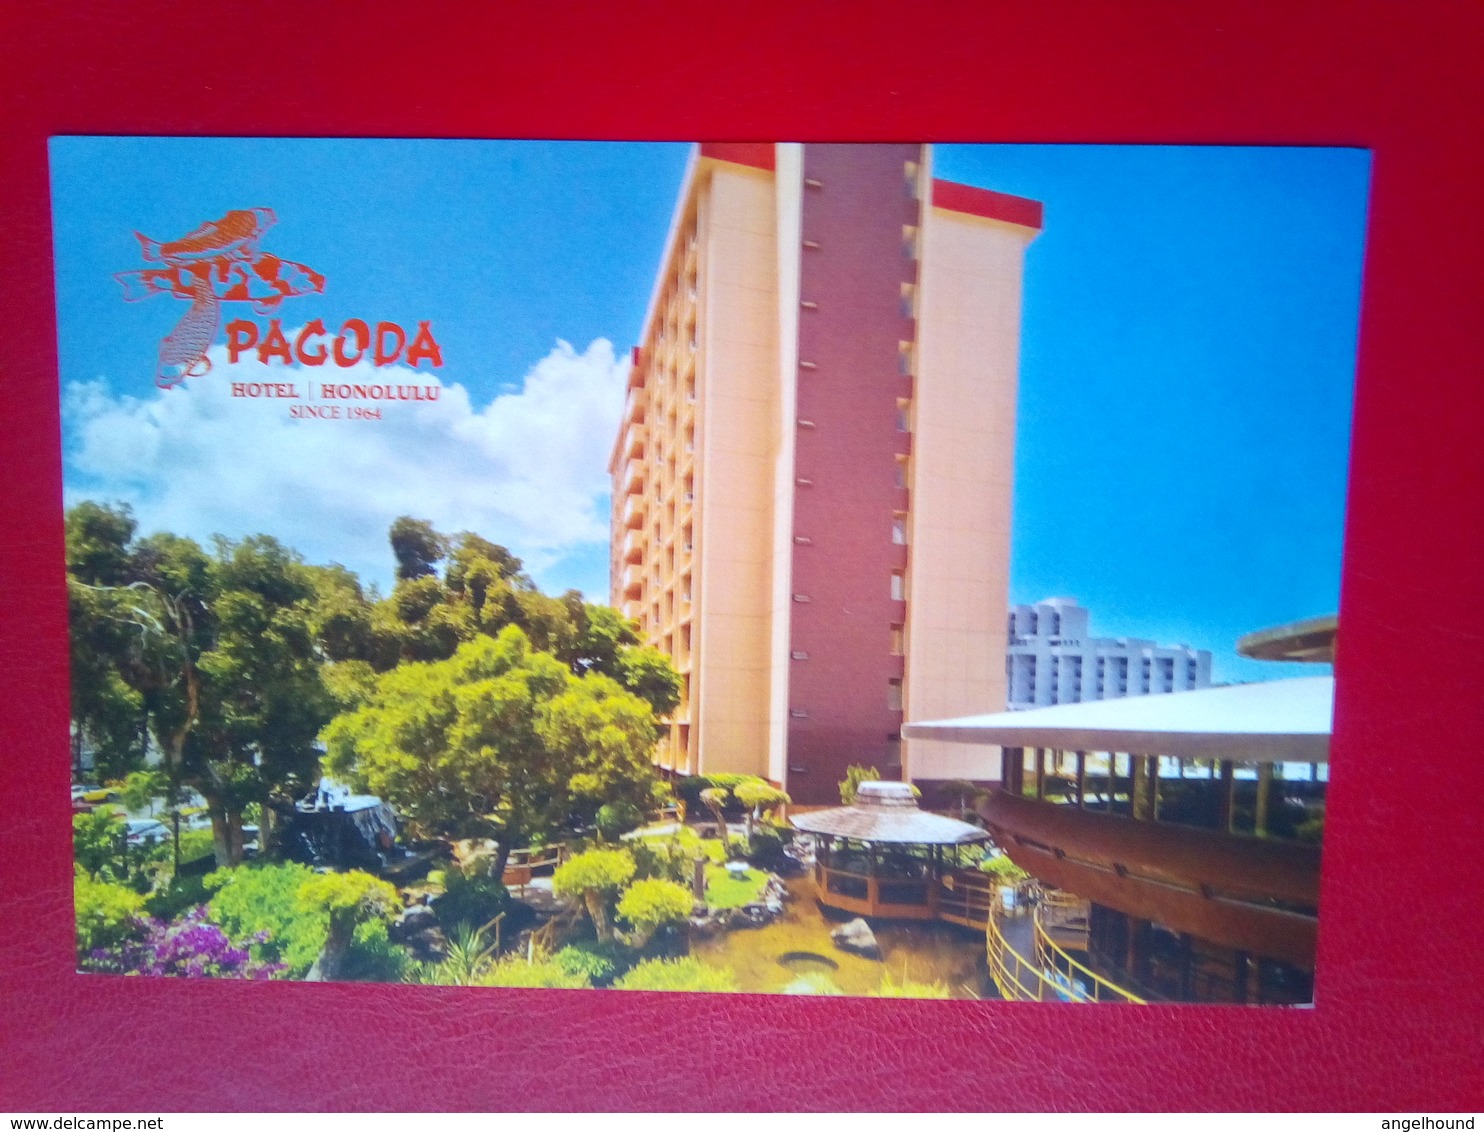 Pagoda Hotel - Honolulu